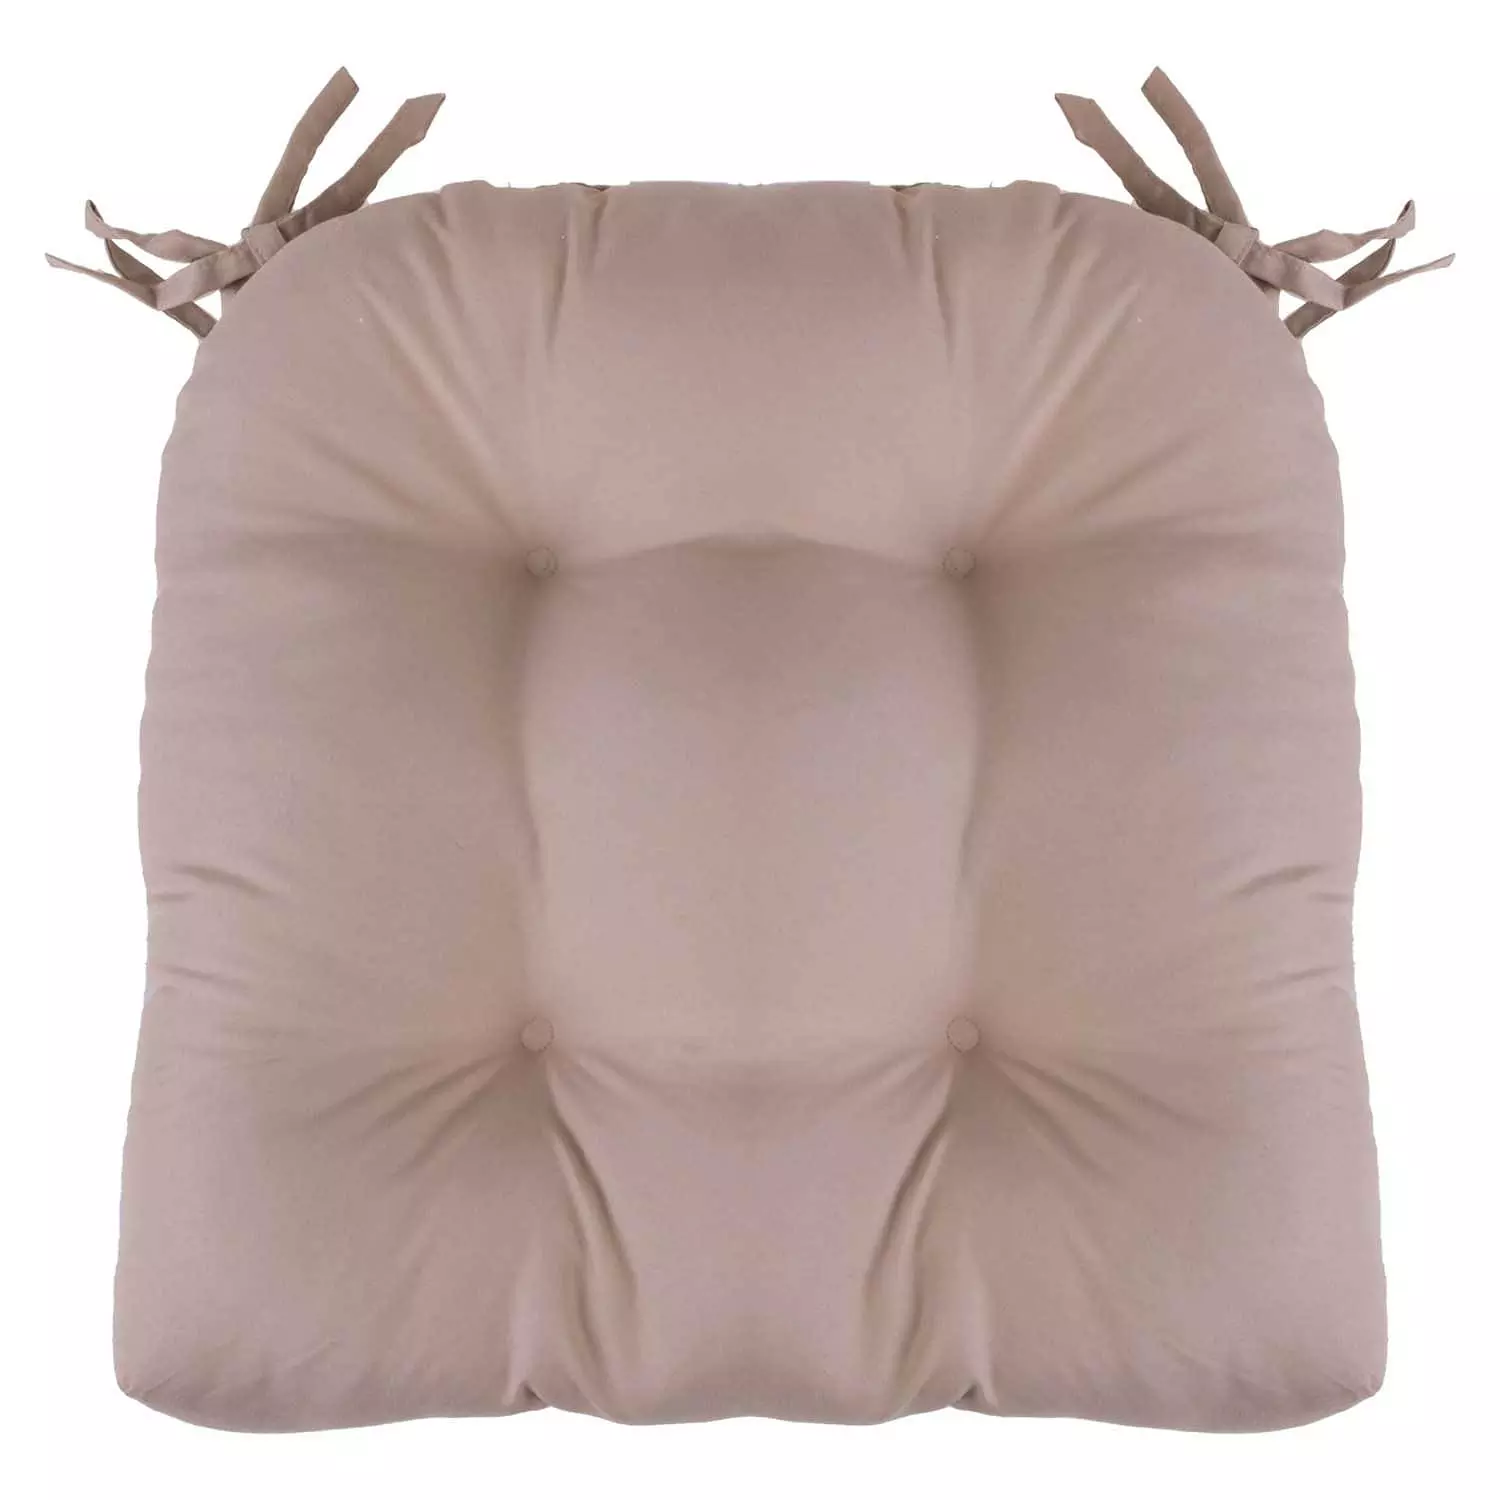 Microfiber chair pad, 15"x15", beige